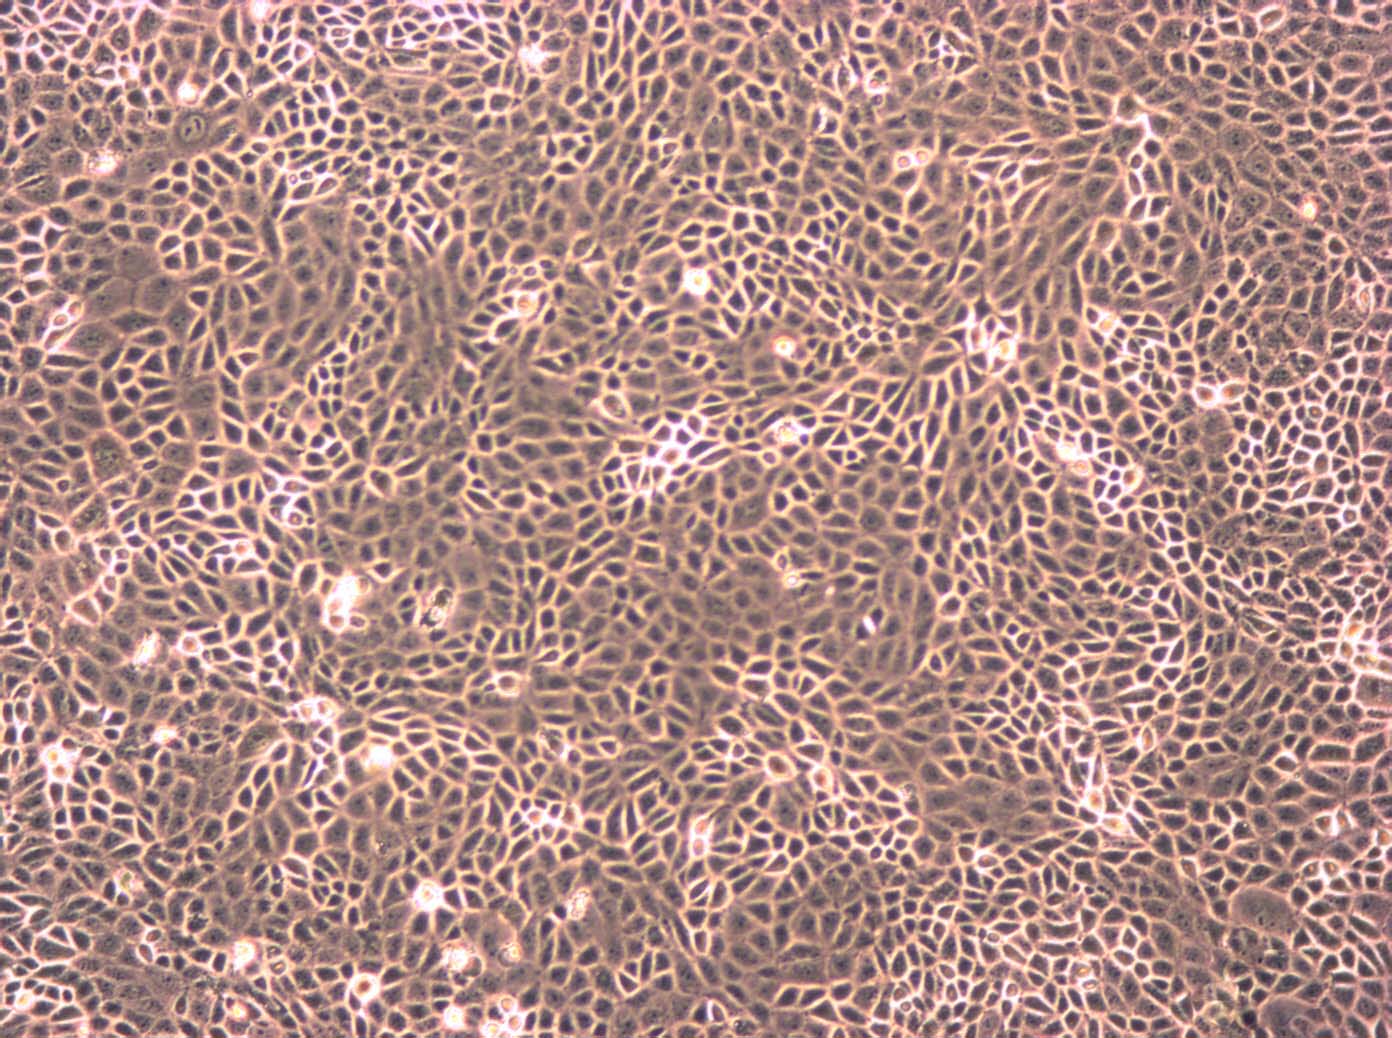 Ca759 Adherent小鼠乳腺癌细胞系